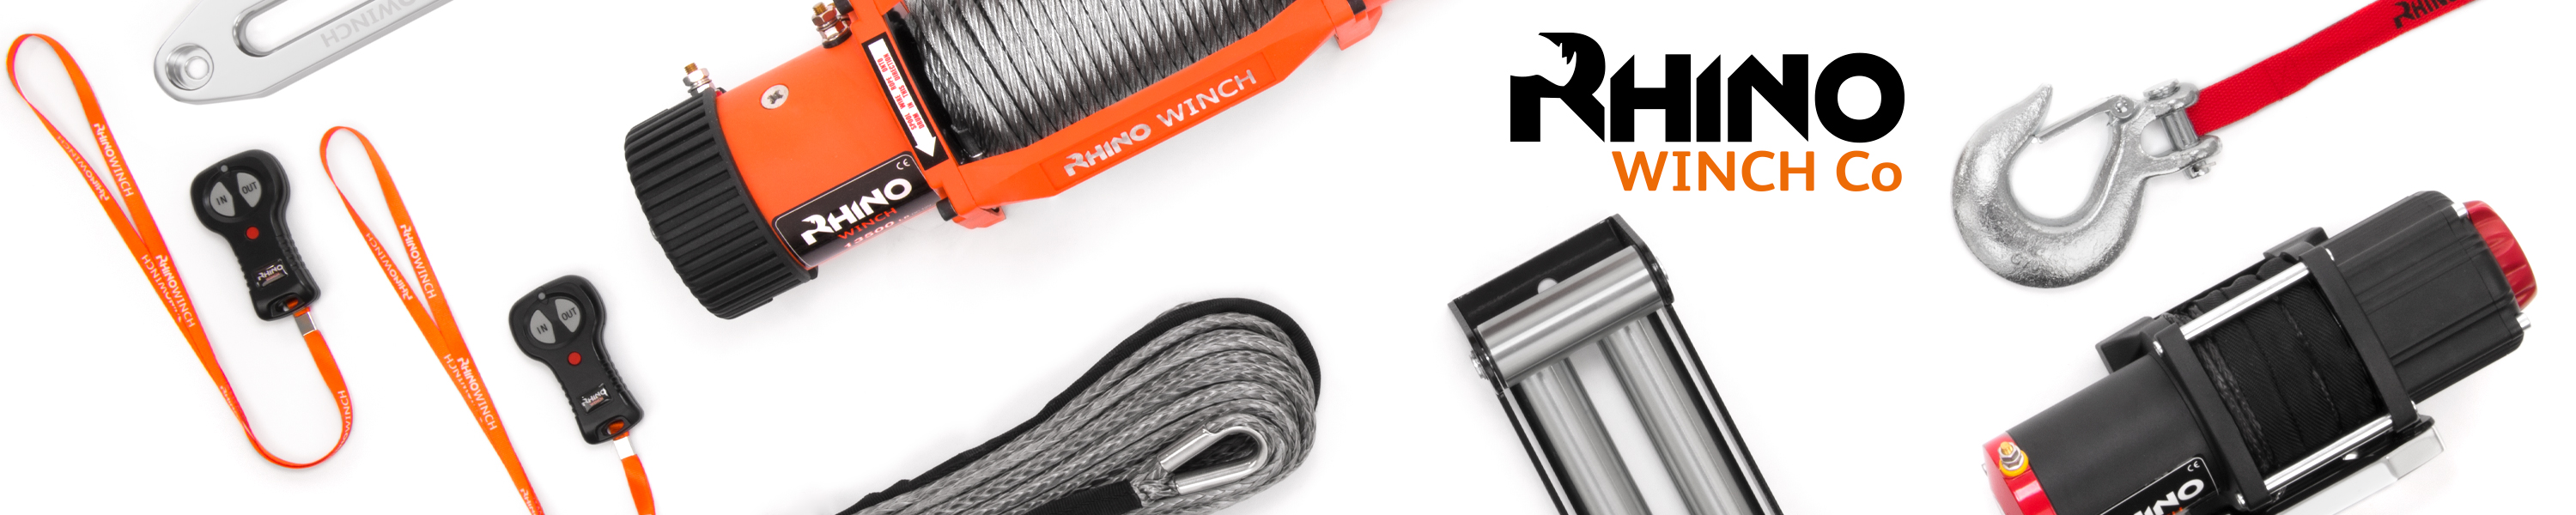 Rhino Winch 13500 Lbs : Avis & test treuil électrique 2024 ! - Avis Treuil